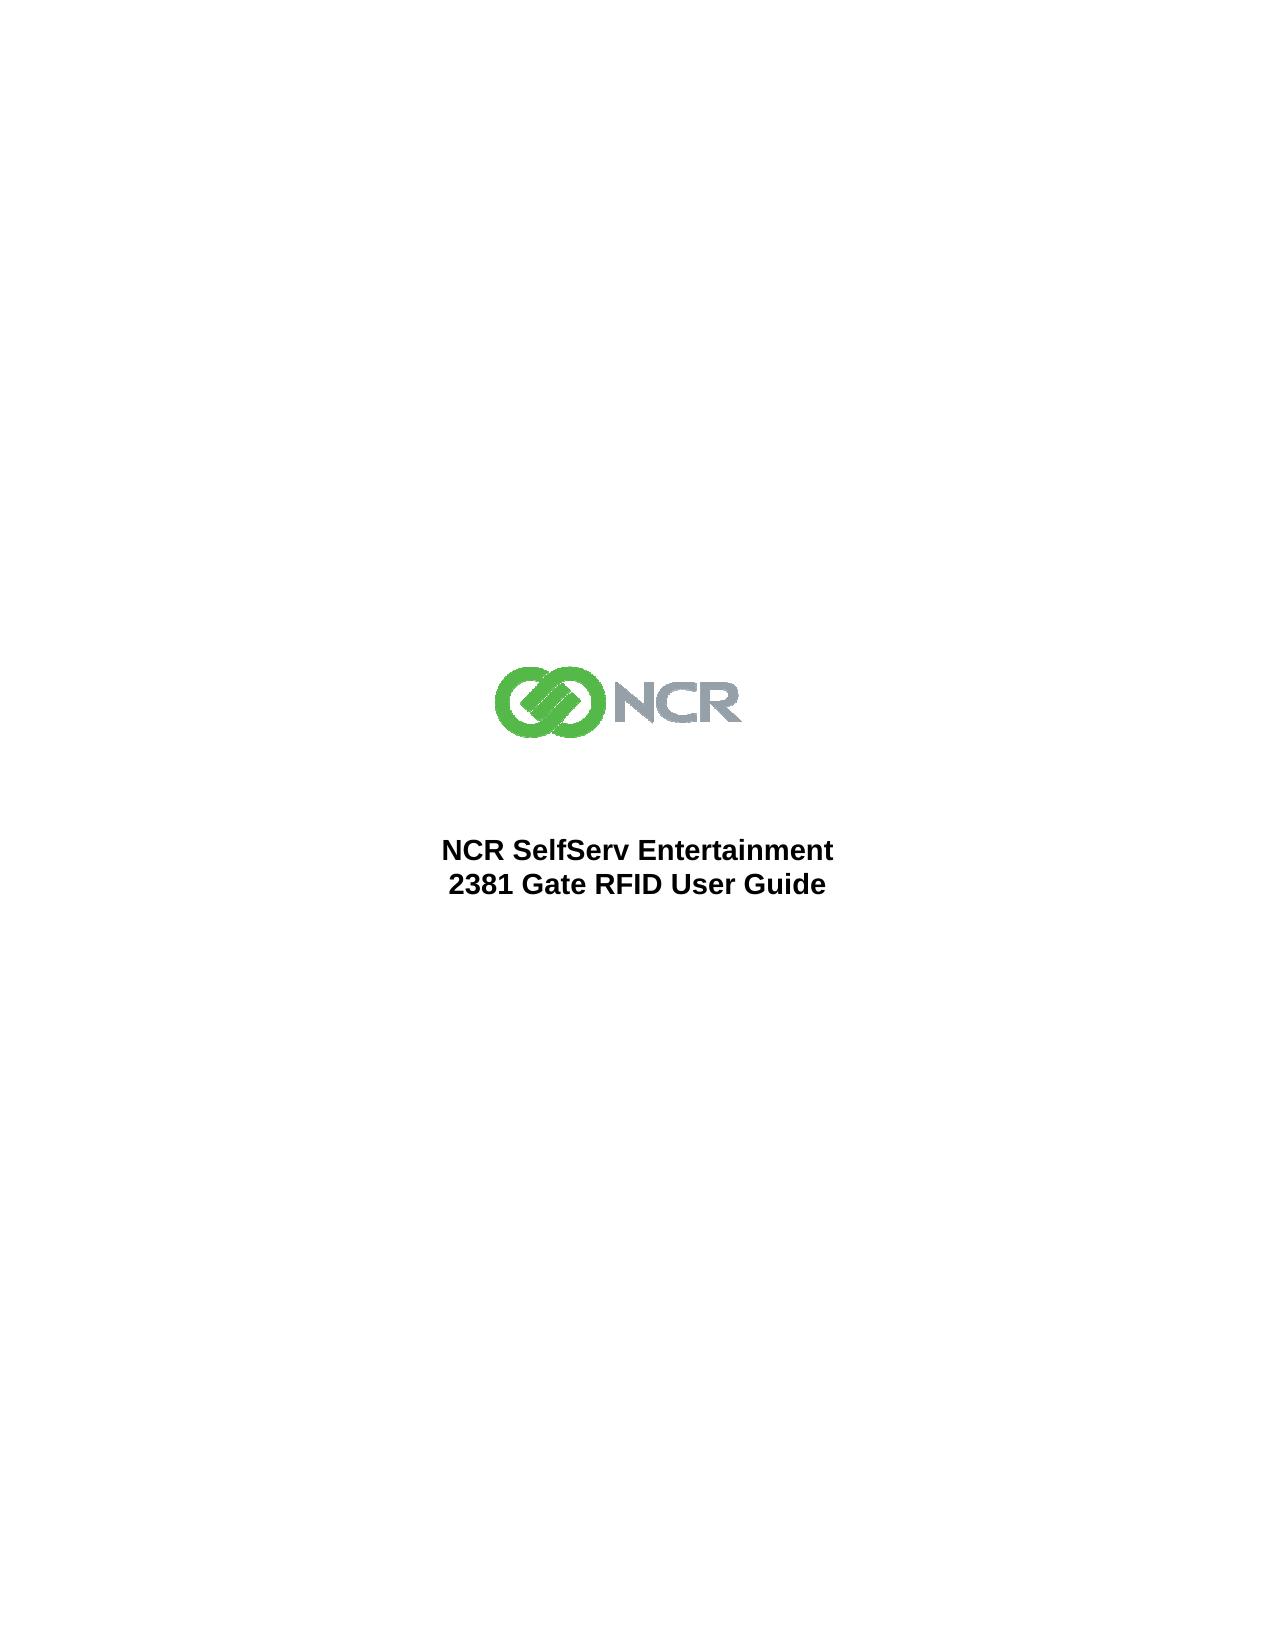                             NCR SelfServ Entertainment 2381 Gate RFID User Guide 